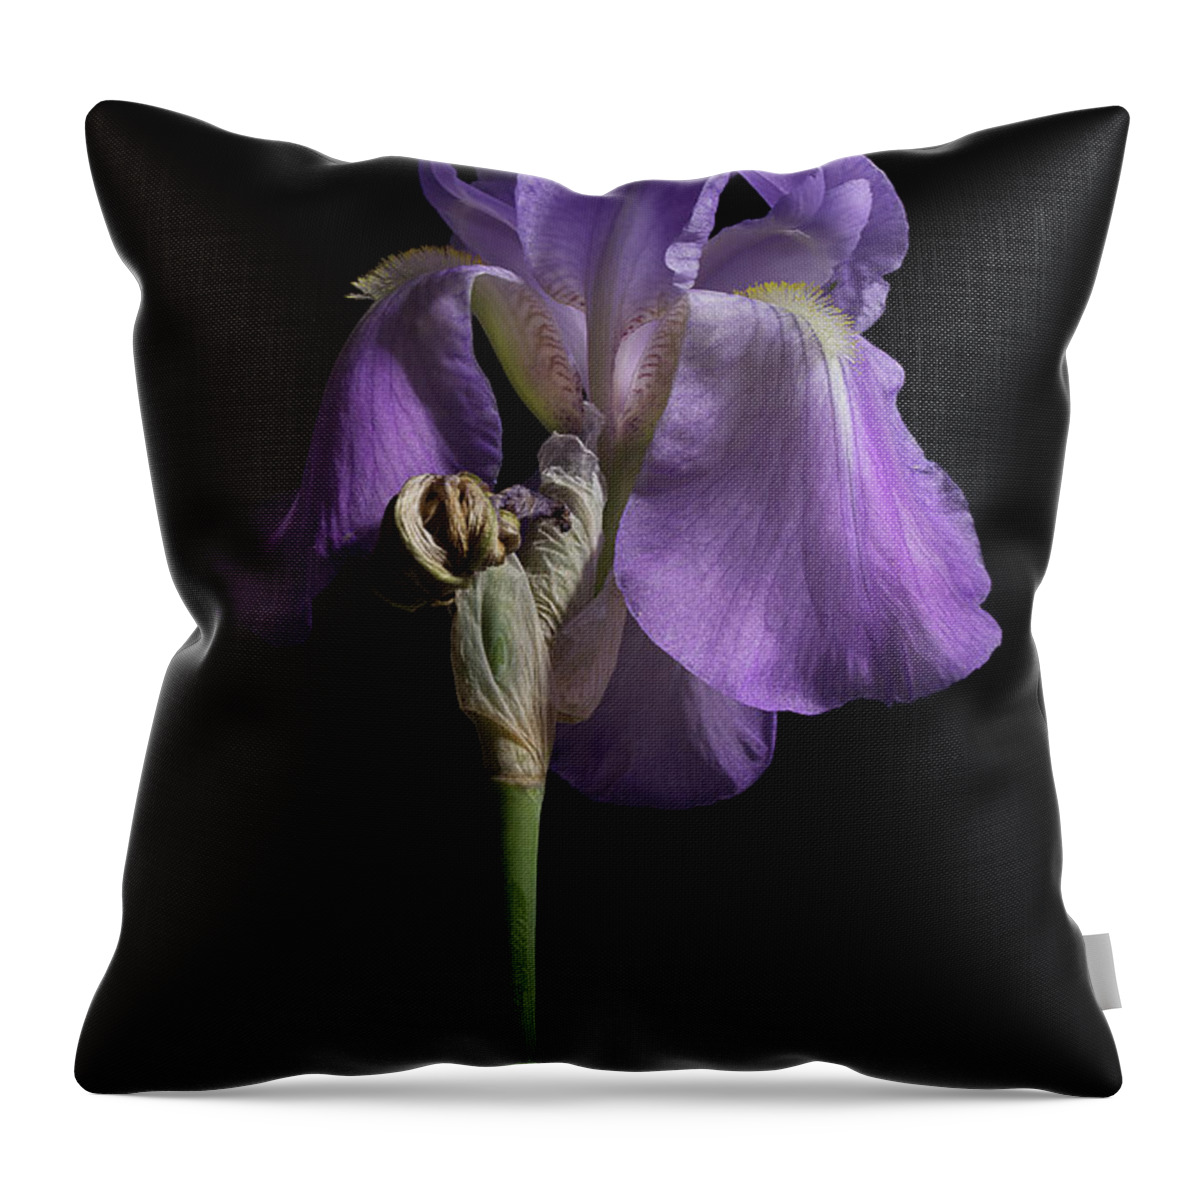 Purple Iris Throw Pillow featuring the photograph Iris Series 1 by Mike Eingle